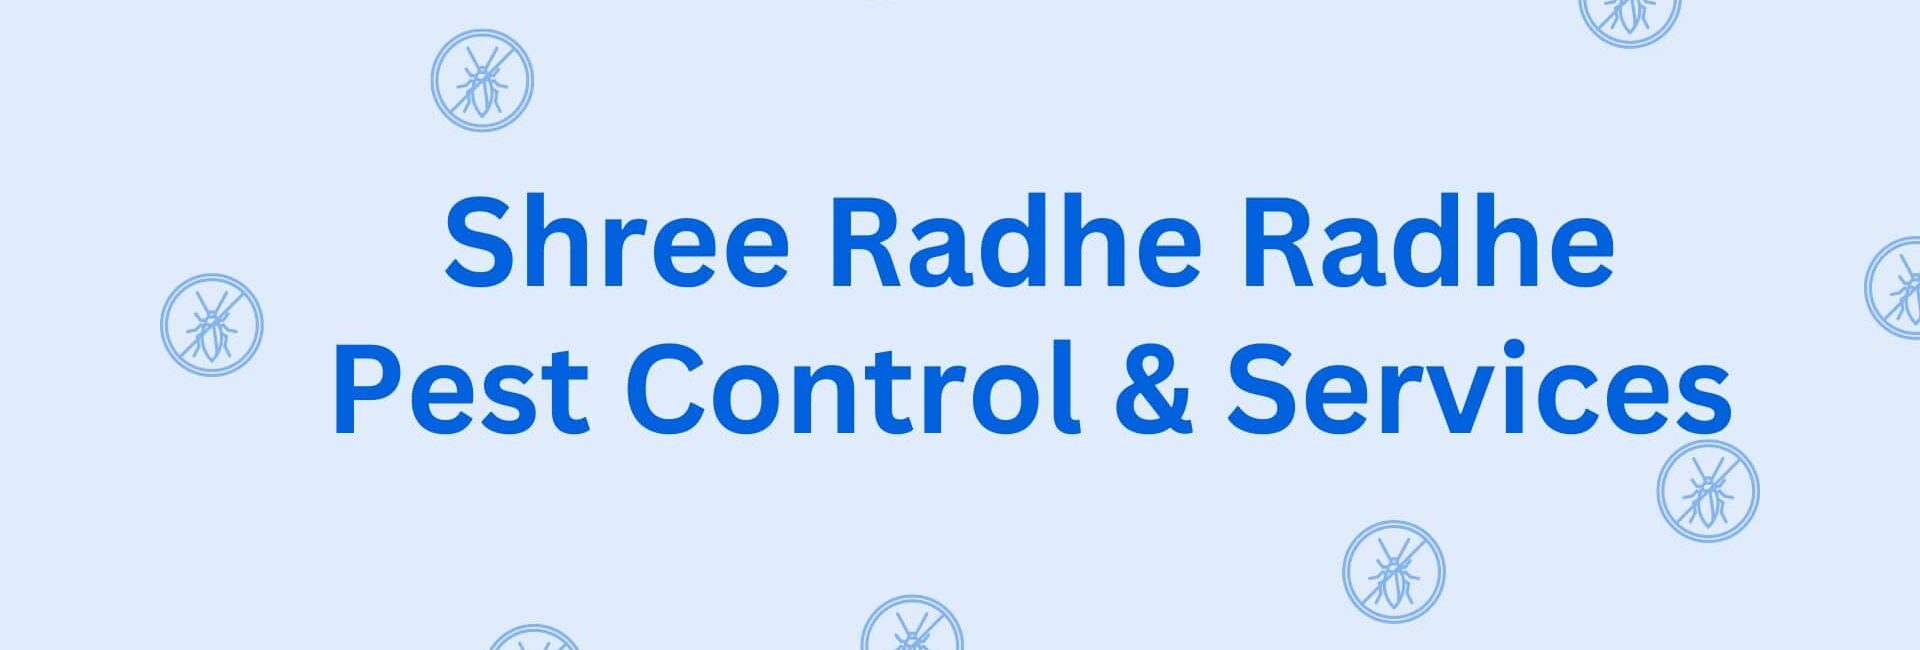 Shree Radhe Radhe Pest Control & Services - Pest Control Service in Hisar